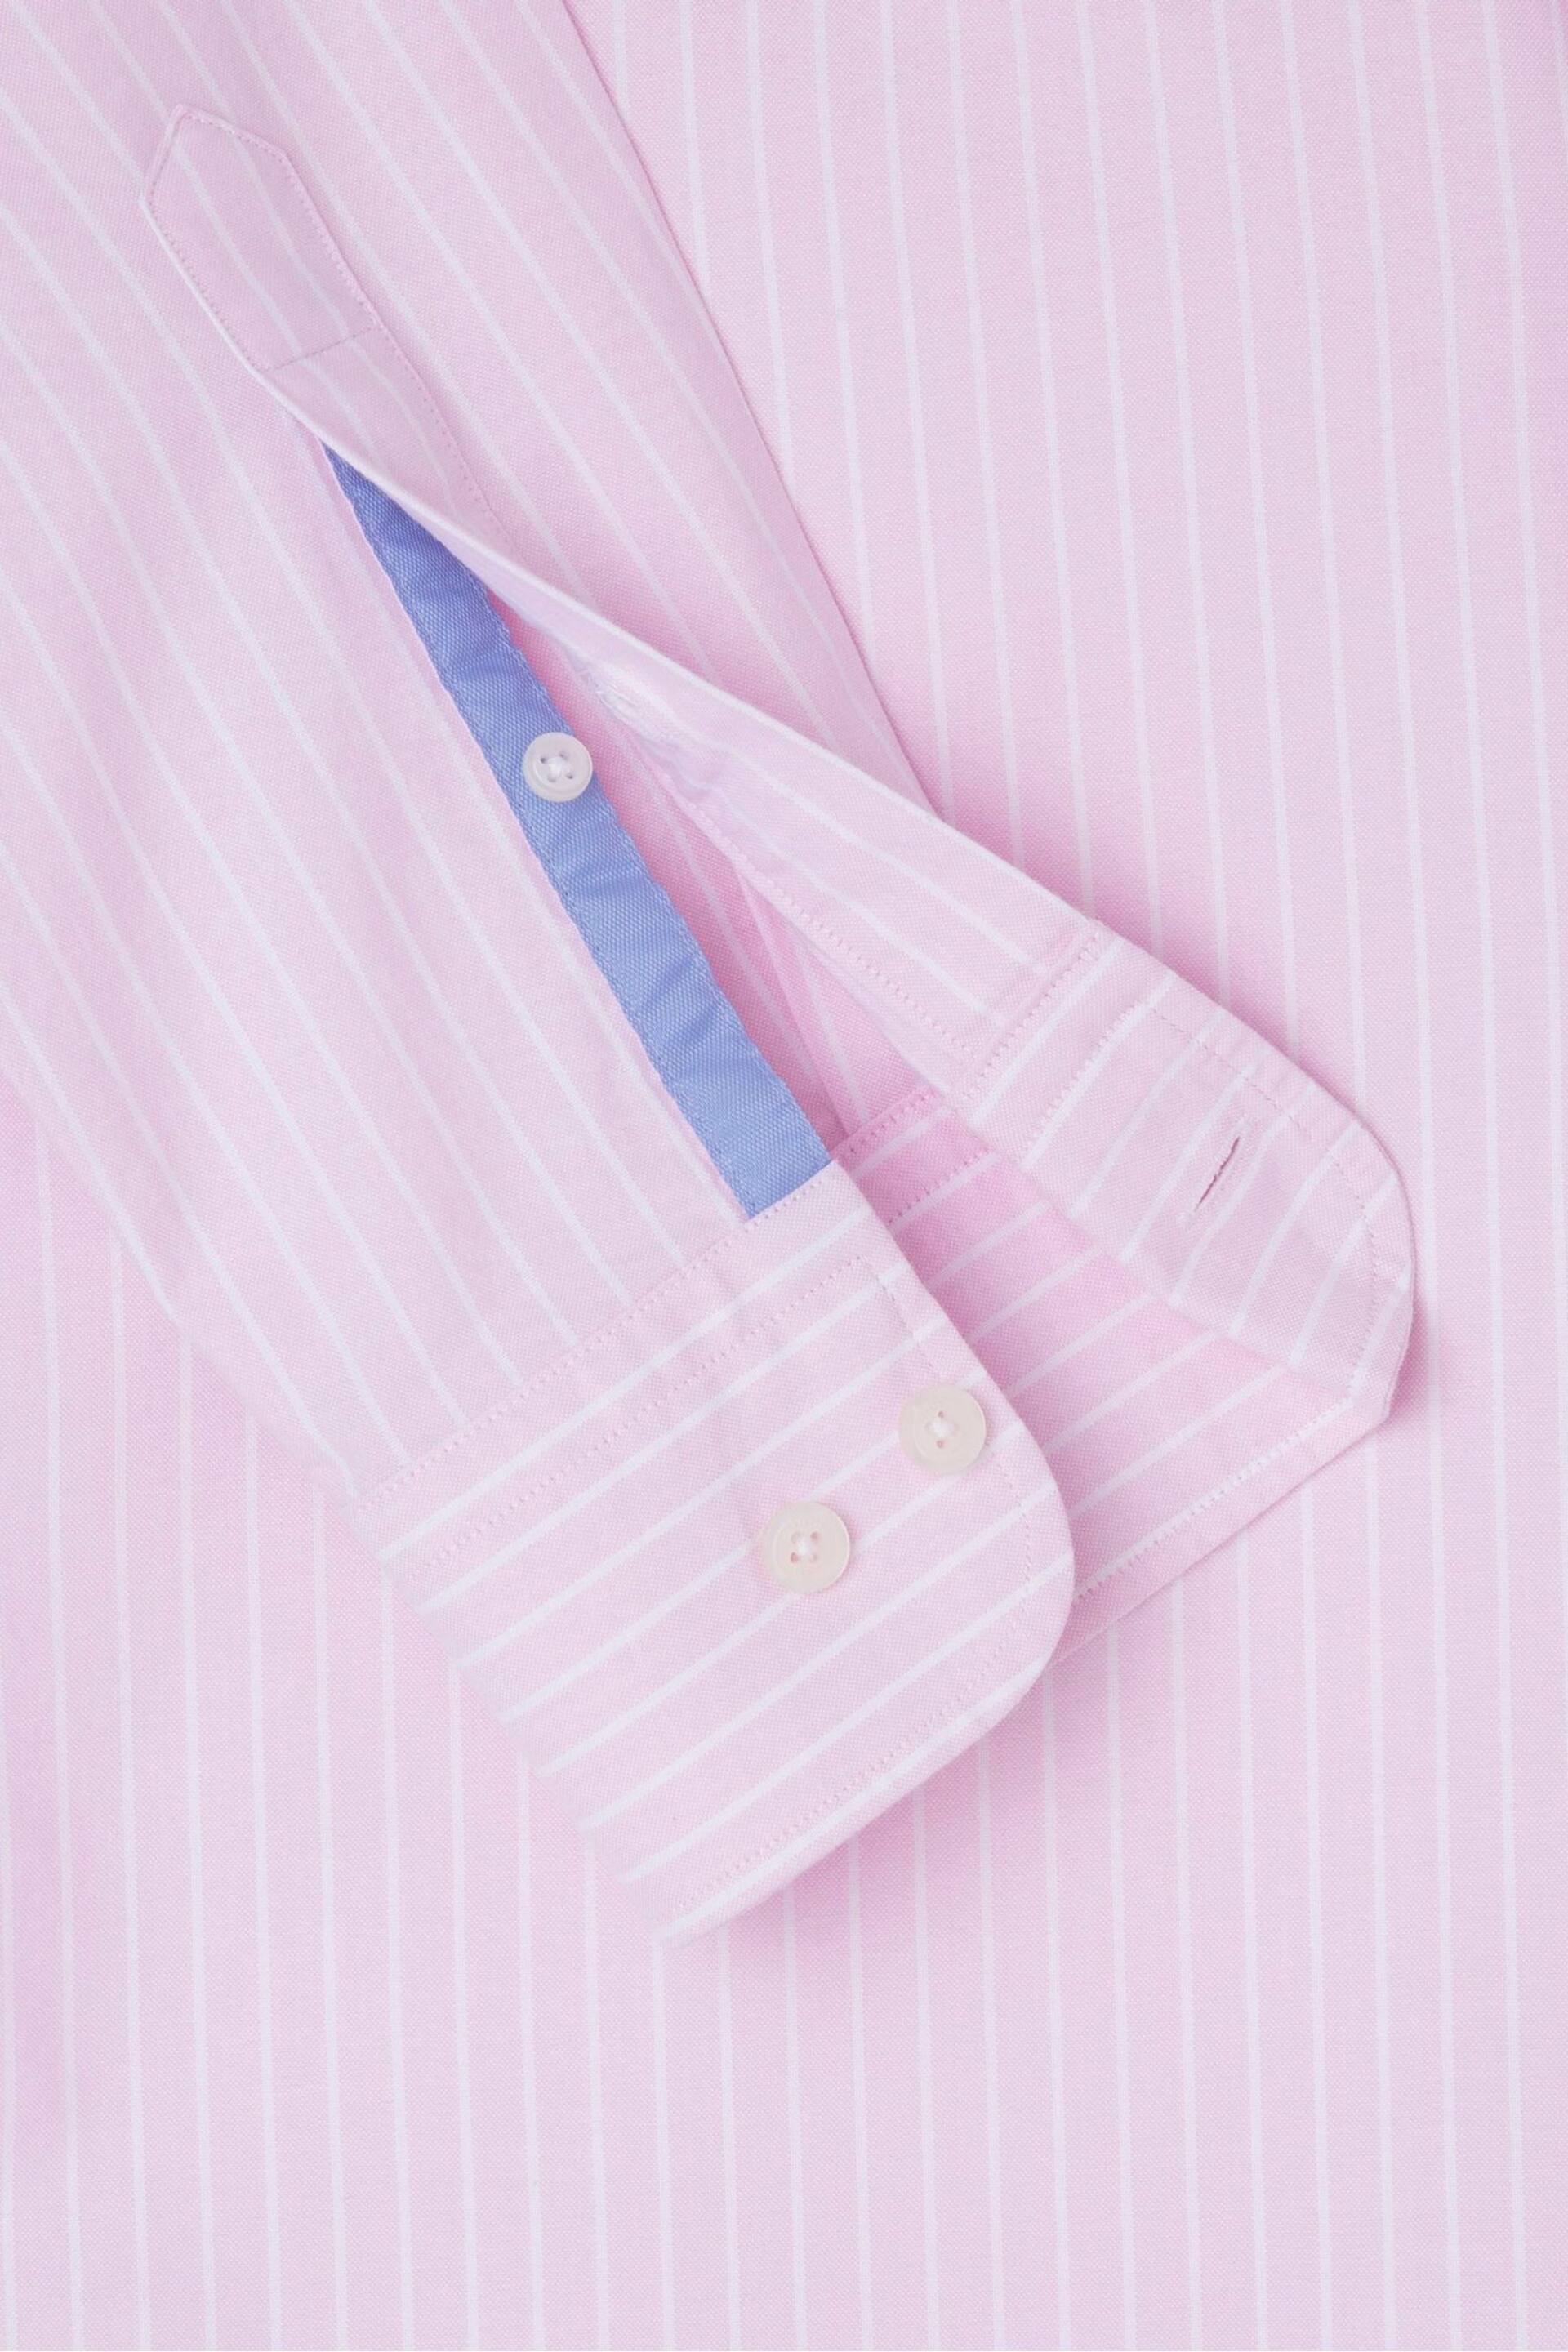 Hackett London Men Pink Long Sleeve Shirt - Image 3 of 3